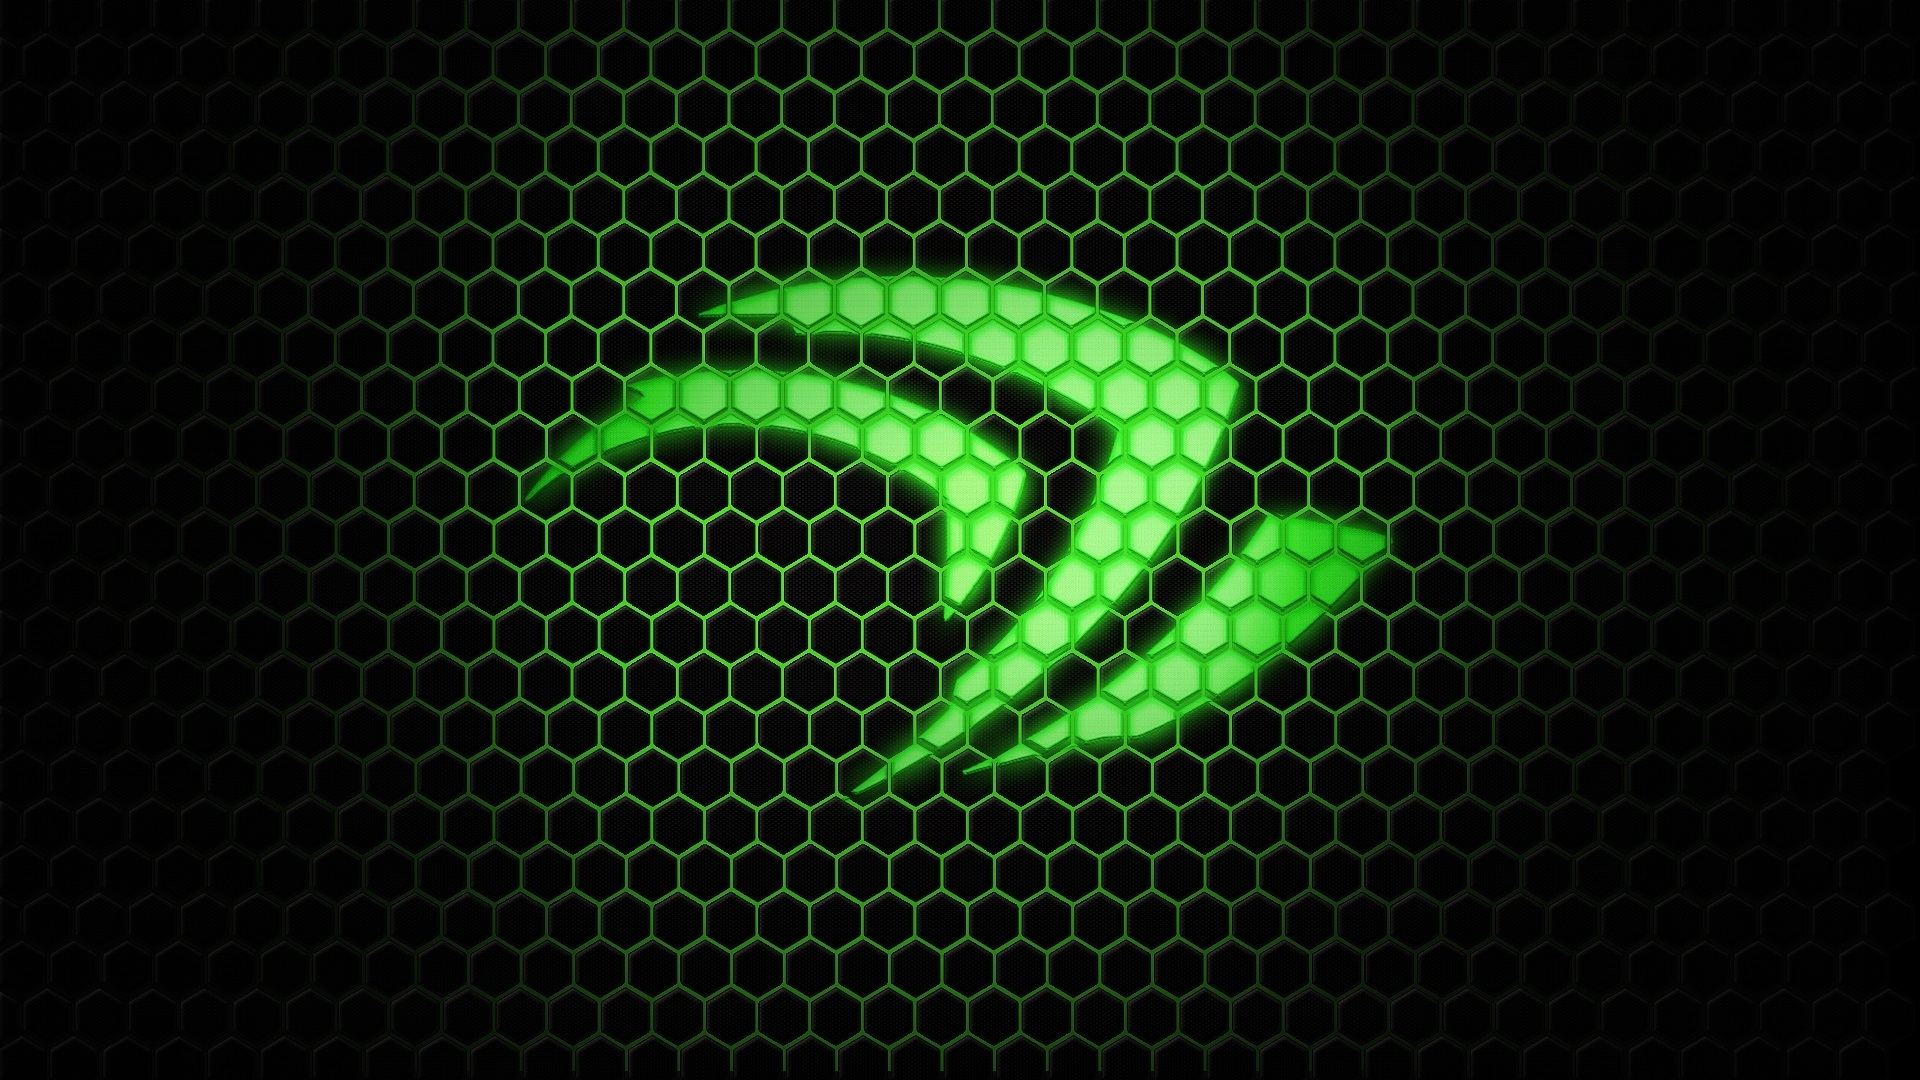 Wallpaper Green Nvidia logo, hexagon background 1920x1080 Full HD 2K Picture, Image